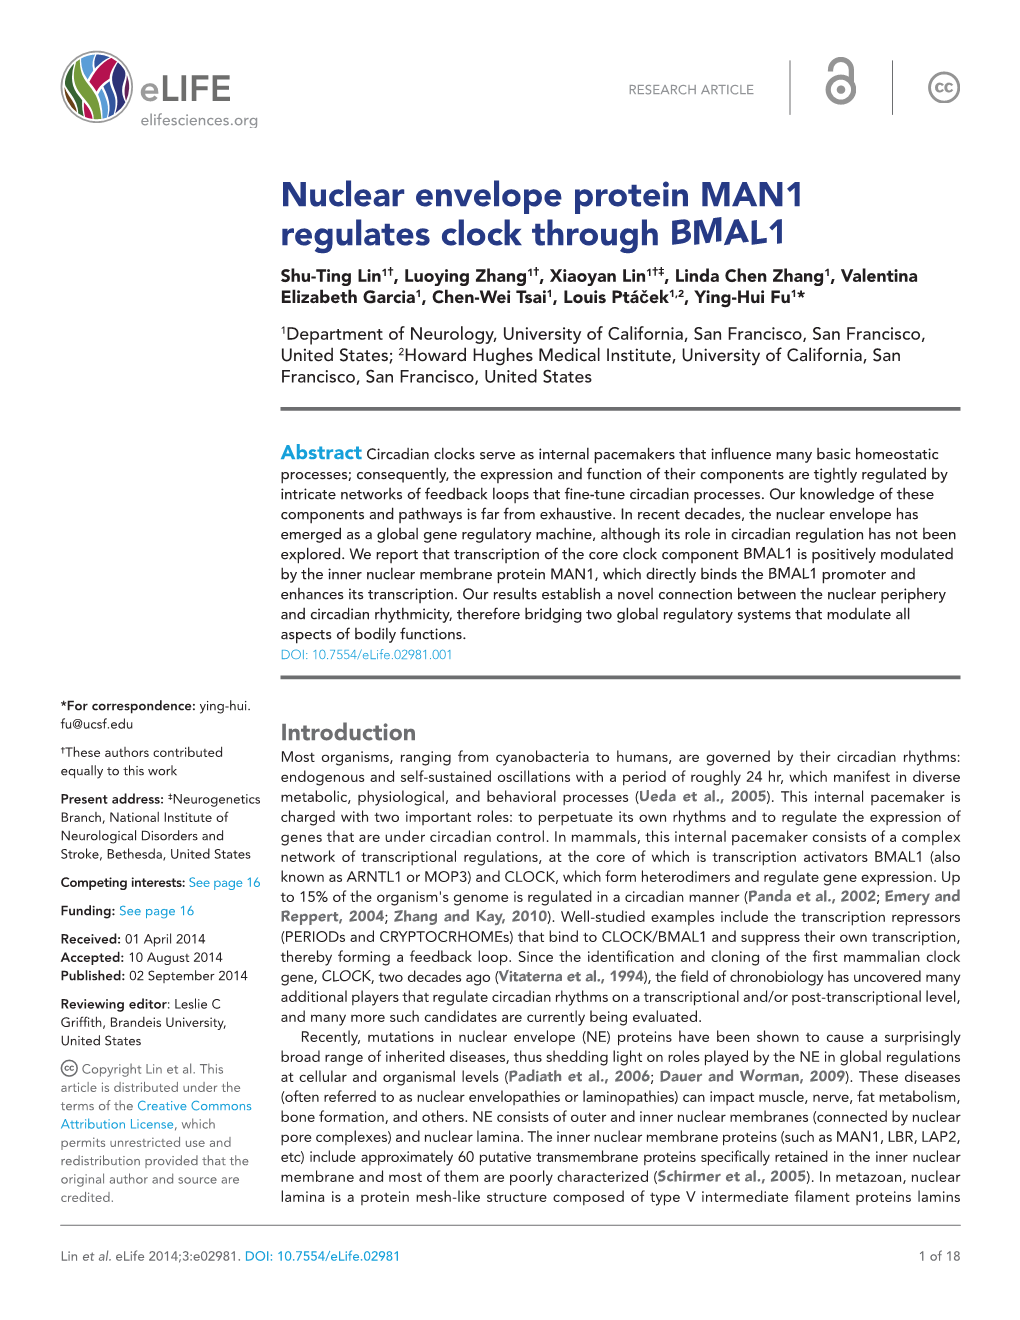 Nuclear Envelope Protein MAN1 Regulates Clock Through BMAL1